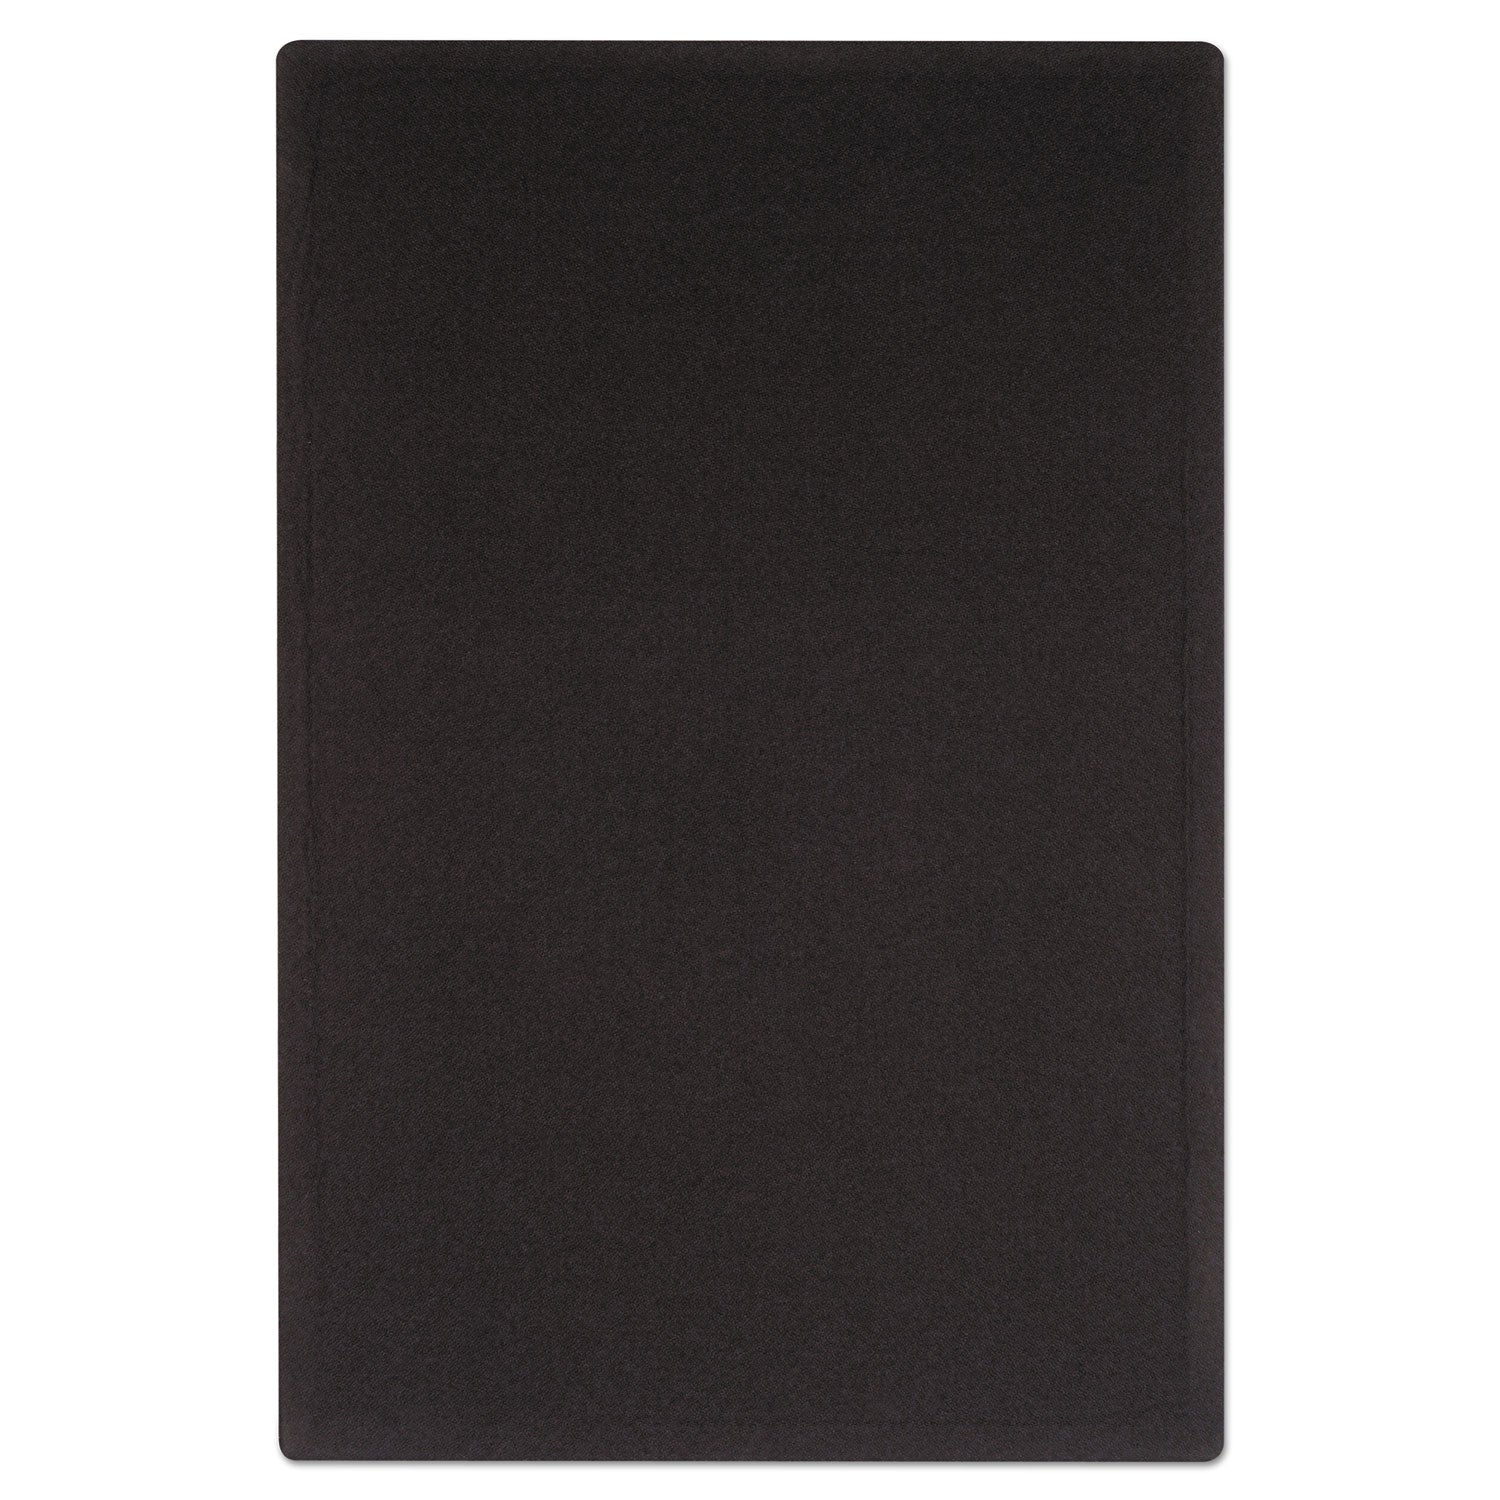 Oval Office Fabric Bulletin Board, 36 x 24, Black Surface - 